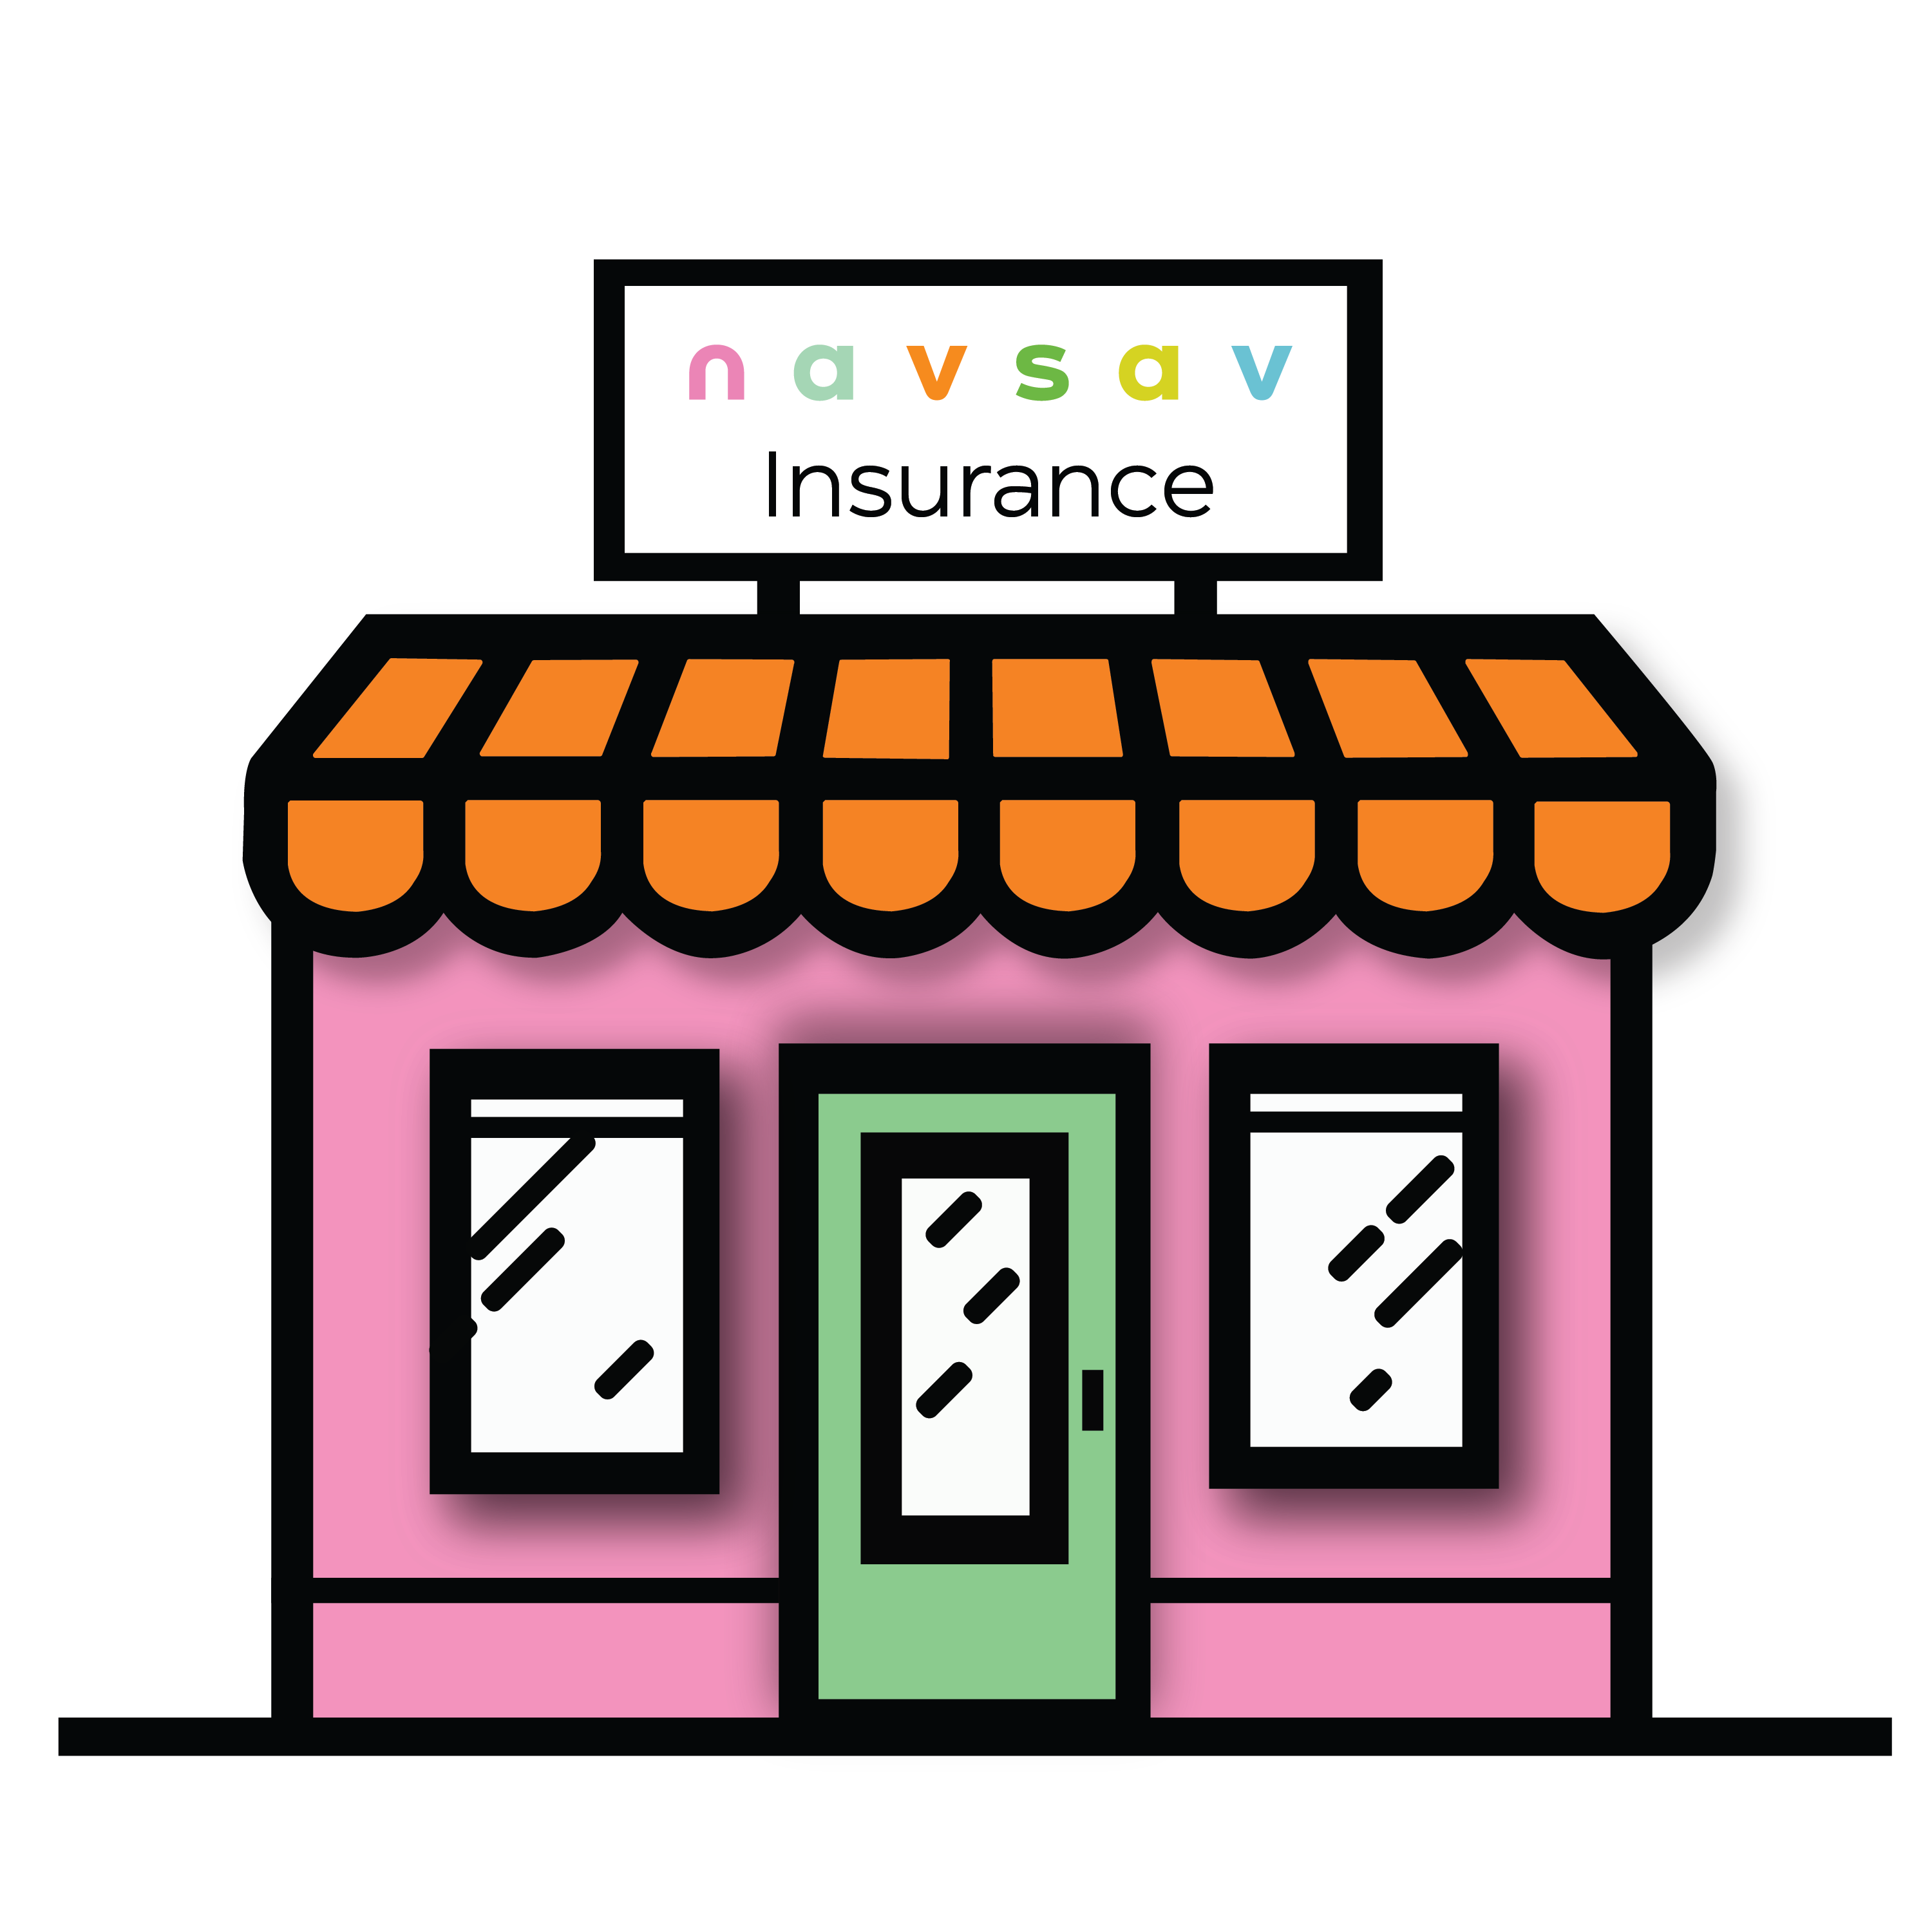 Image 2 | NavSav Insurance - Las Cruces